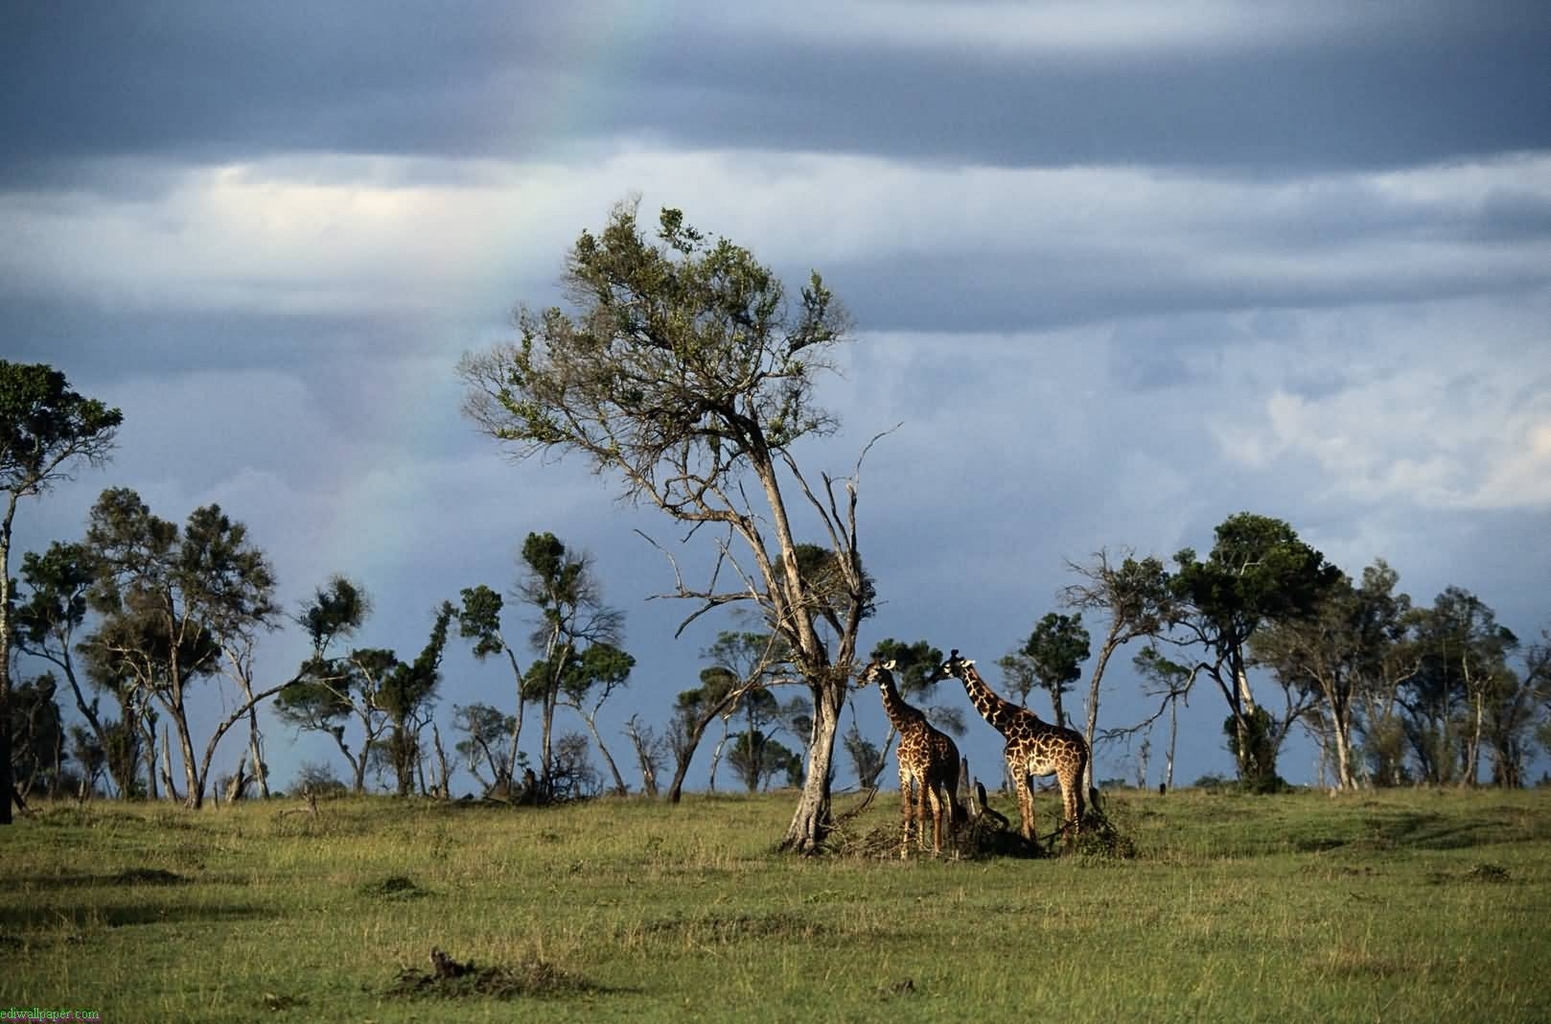 46102 descargar imagen animales, paisaje, naturaleza, jirafas, azul: fondos de pantalla y protectores de pantalla gratis